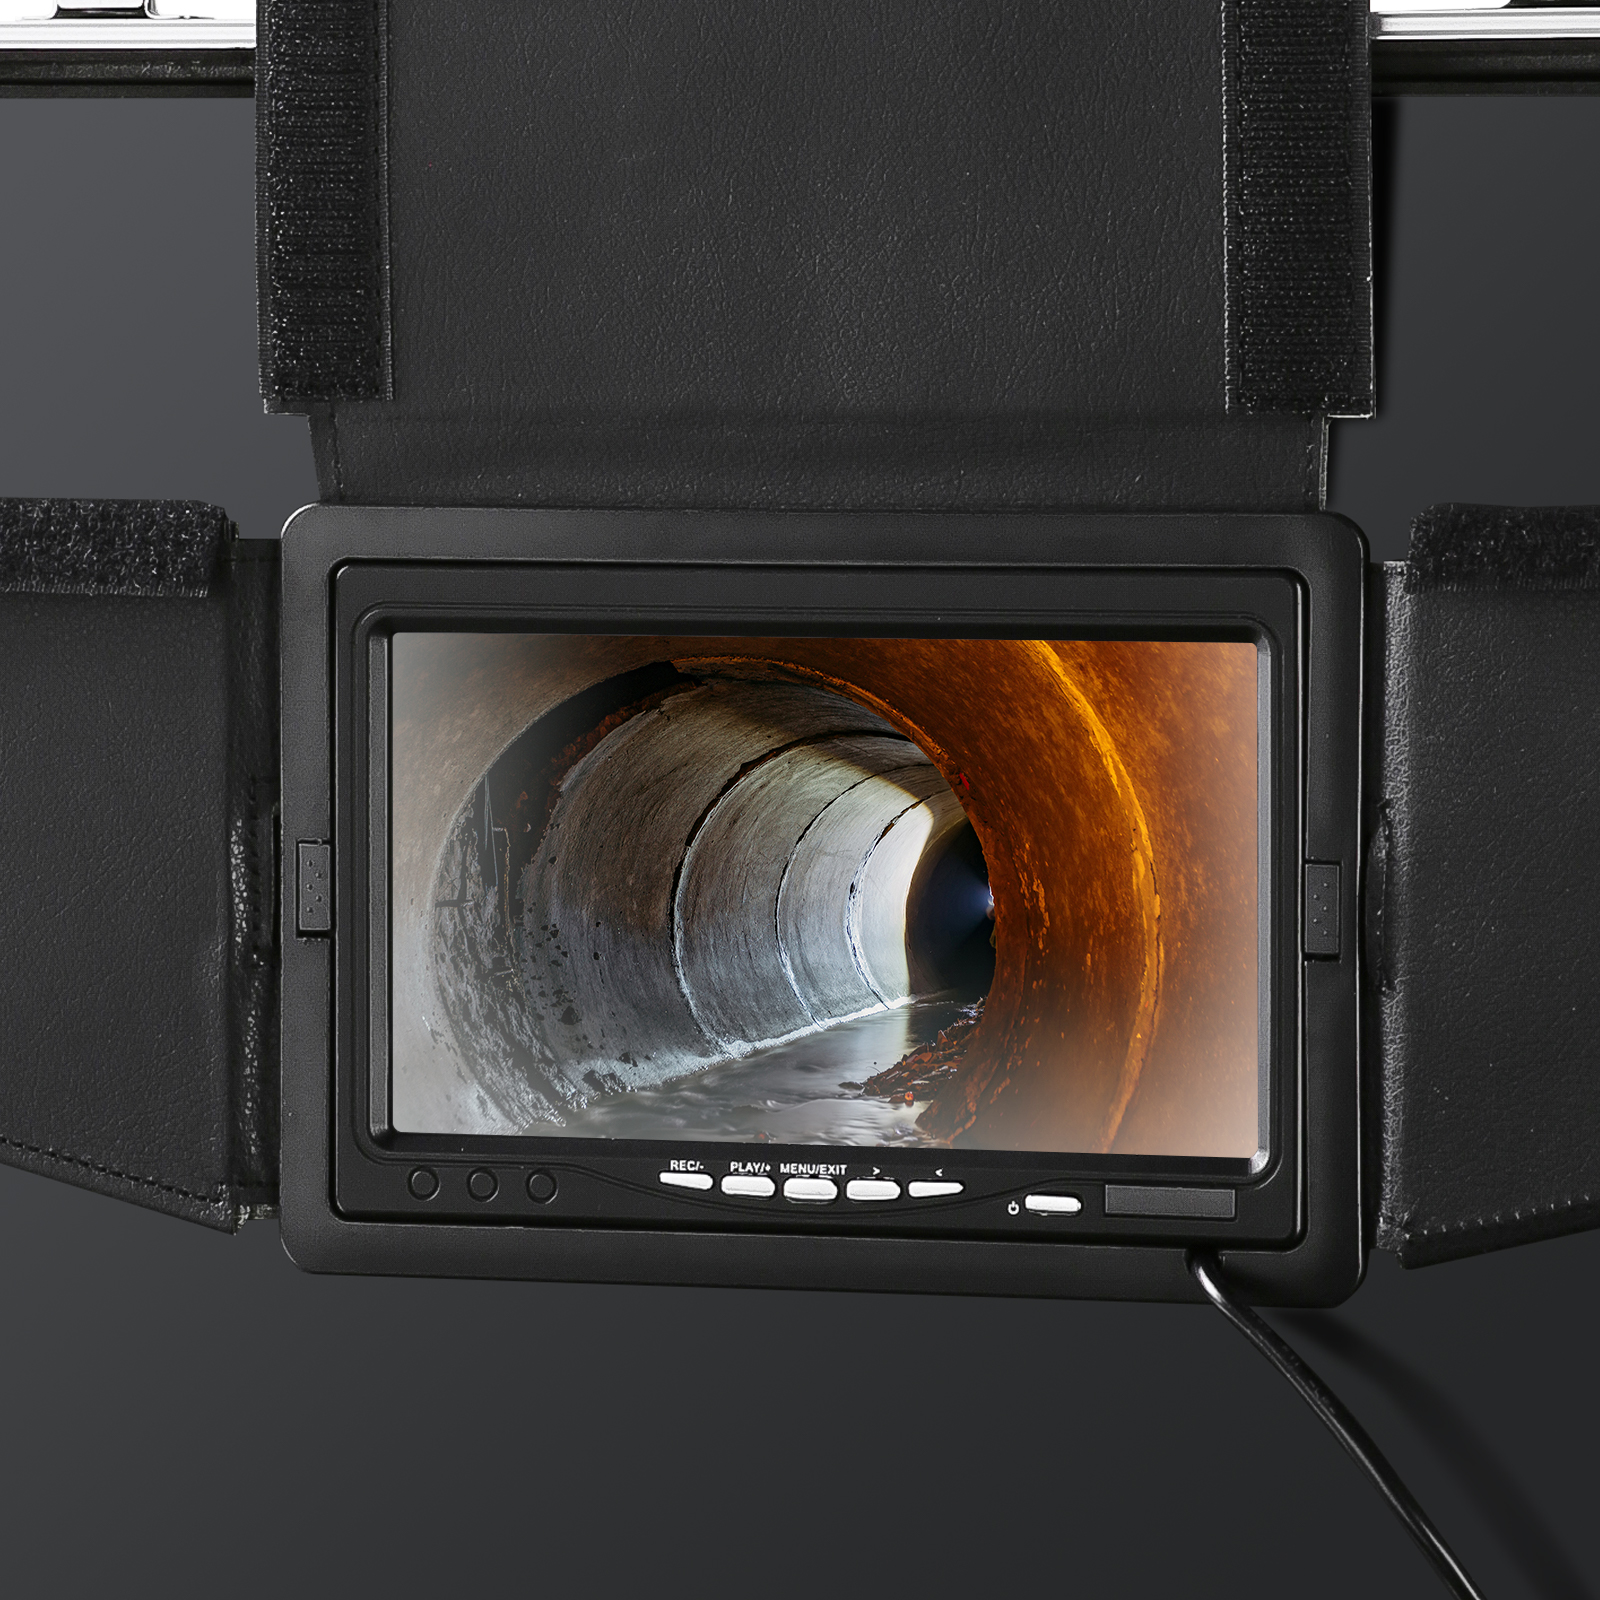 Камера для осмотра труб VEVOR Камера для осмотра канализации Эндоскоп 1000ТВЛ Камера для осмотра 130° угол обзора 25 мм диаметр камеры 4500 мАч аккумулятор